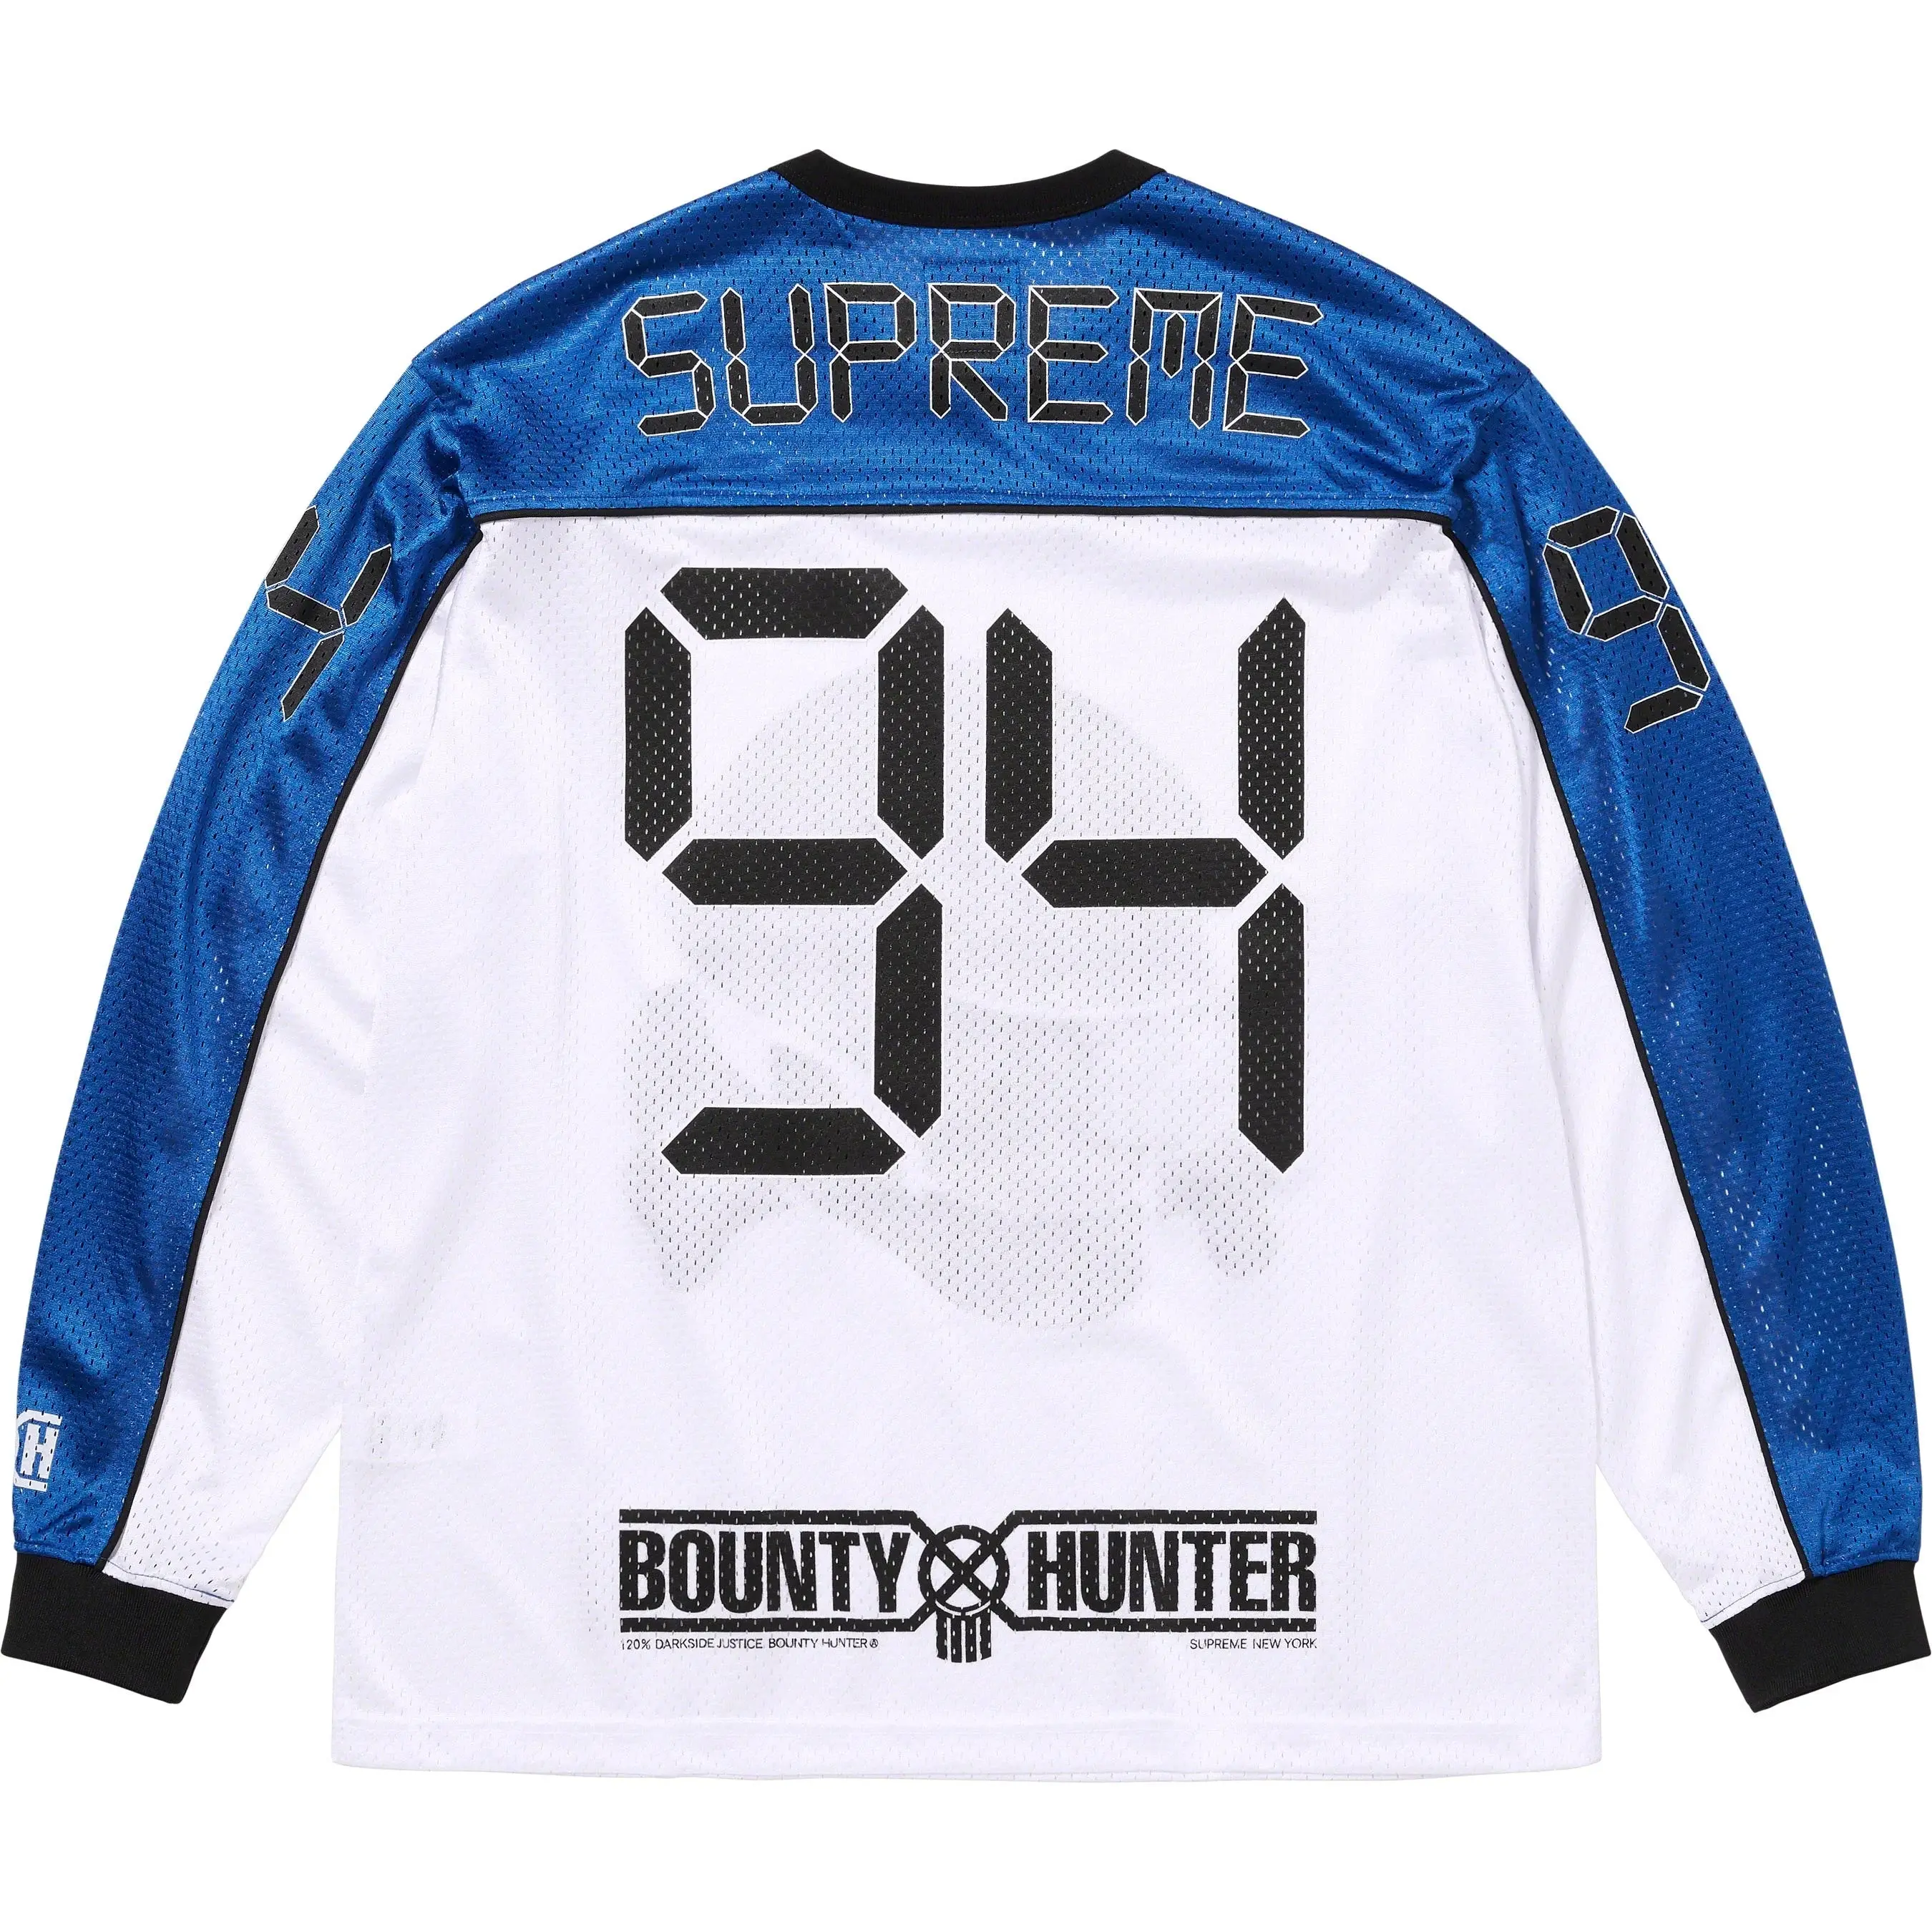 Supreme®/Bounty Hunter® Mesh Moto Jersey